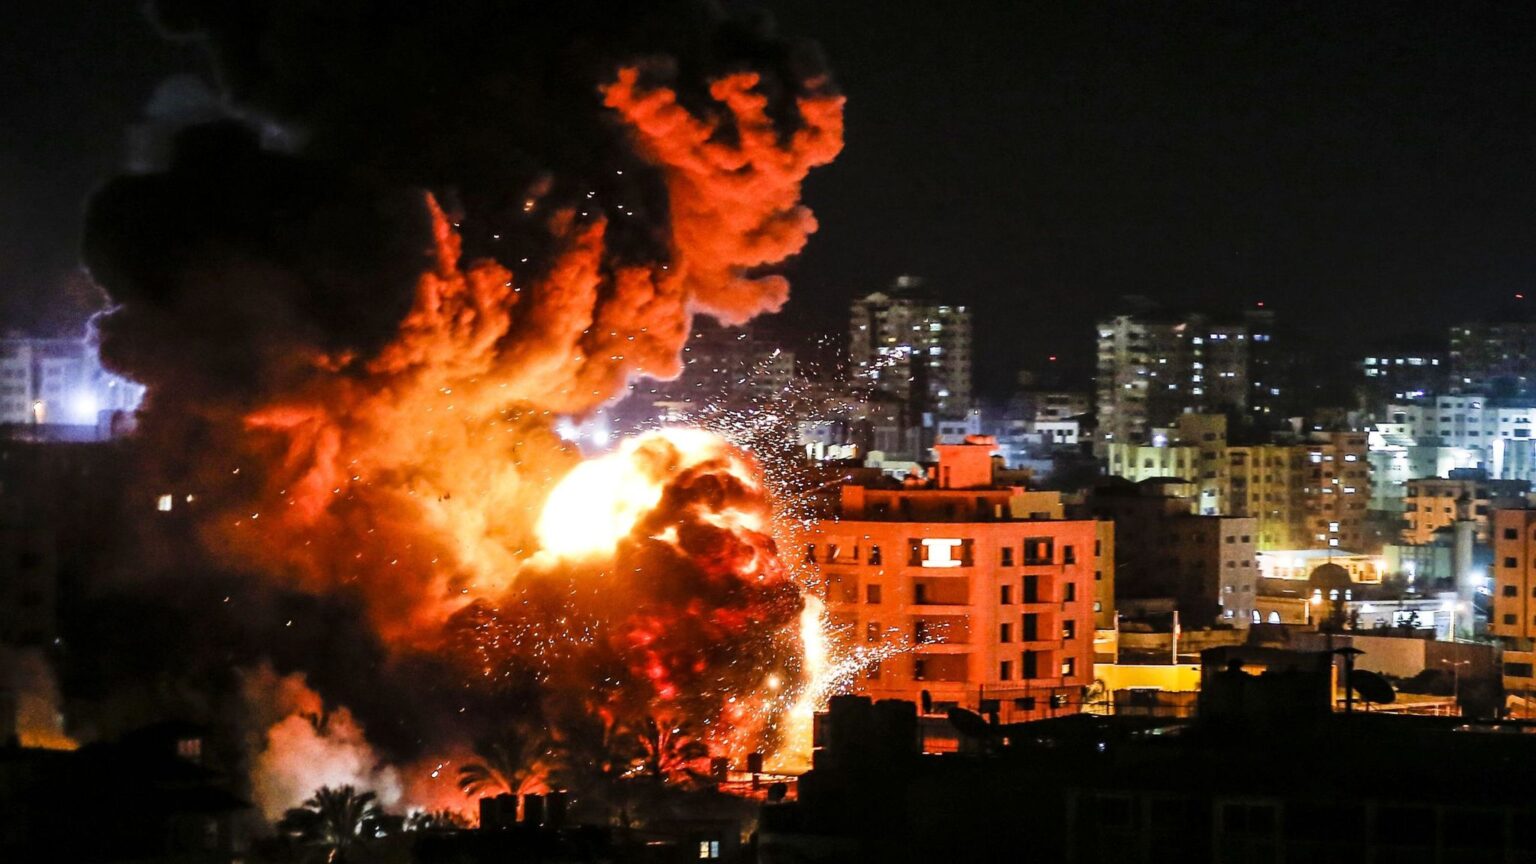 Palestinians report several killed in Israeli air raid on Gaza